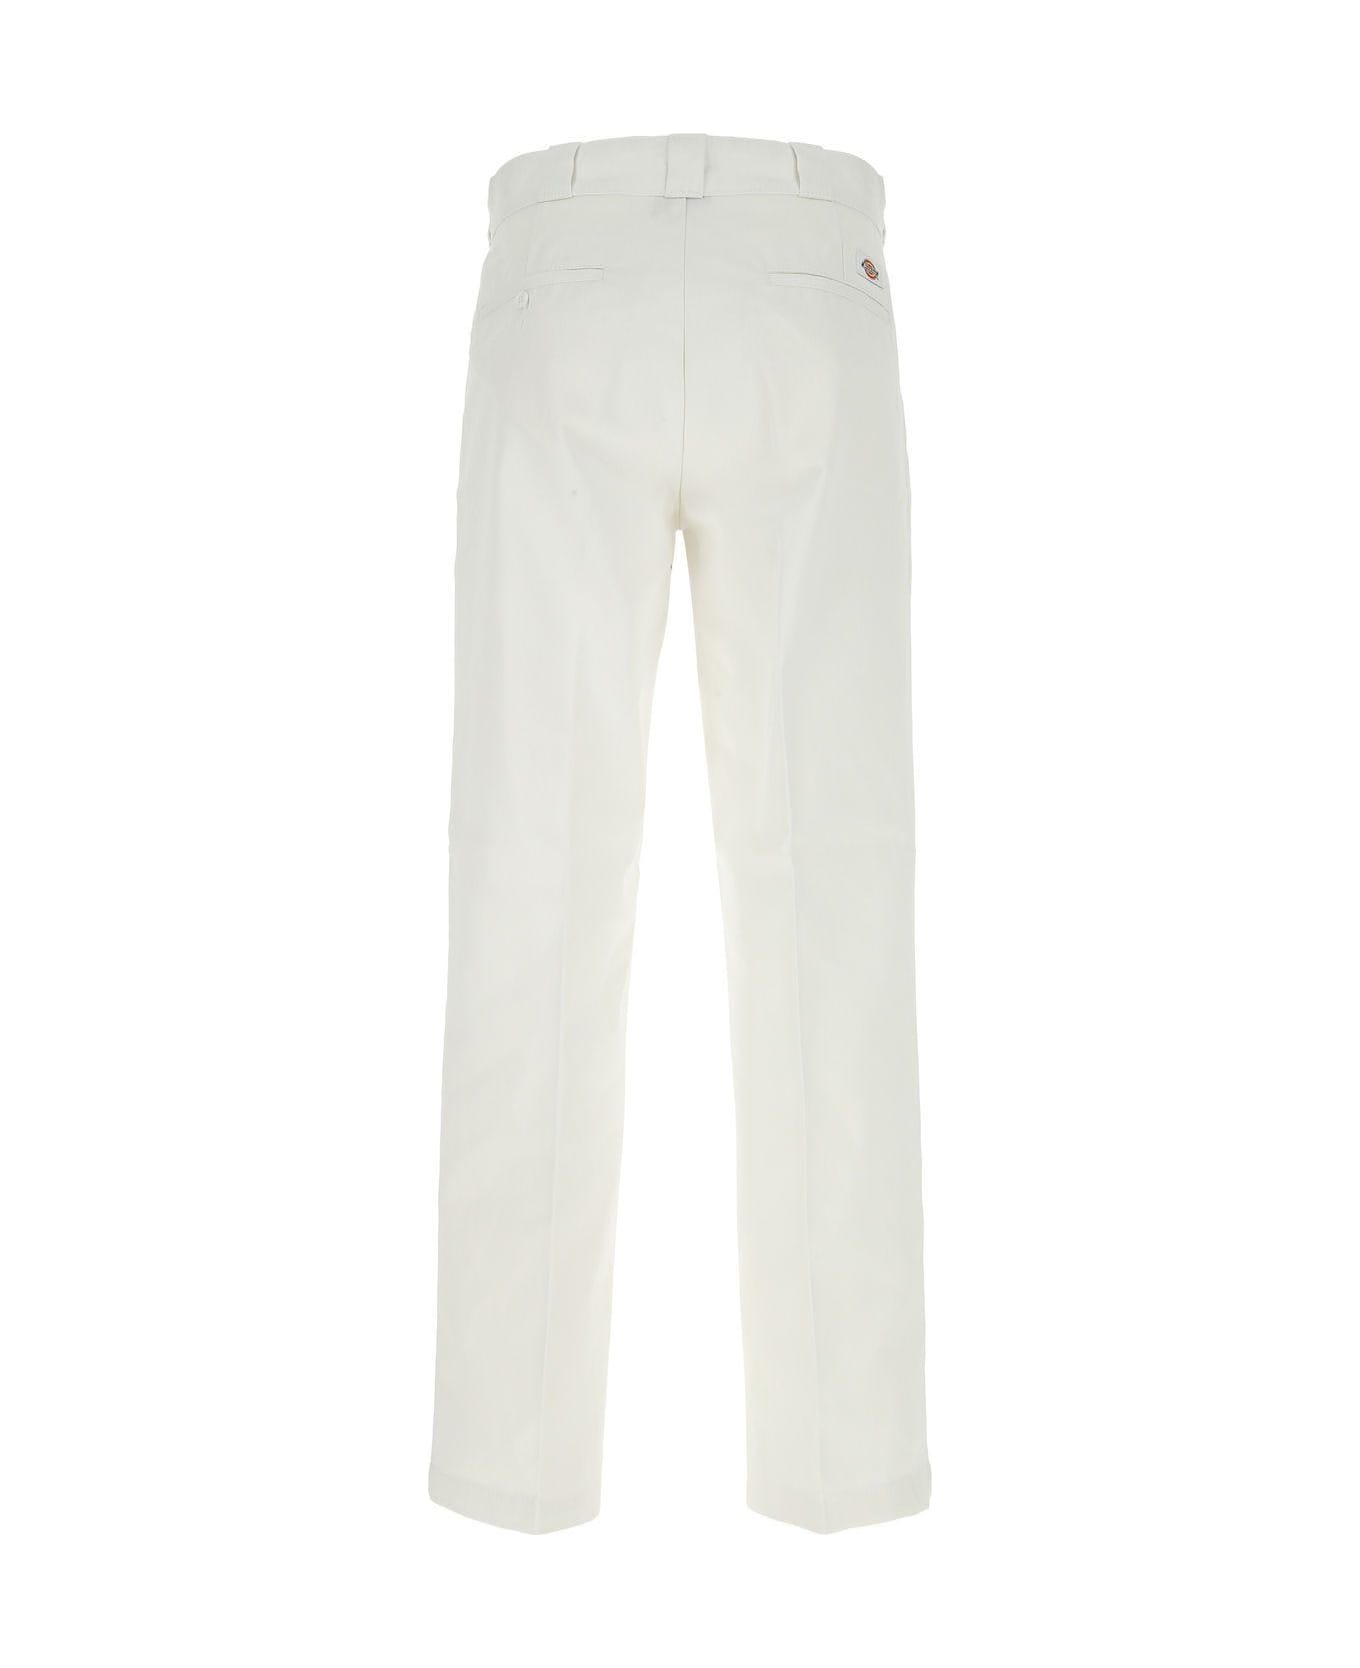 Dickies White Polyester Blend Pant - WHITE